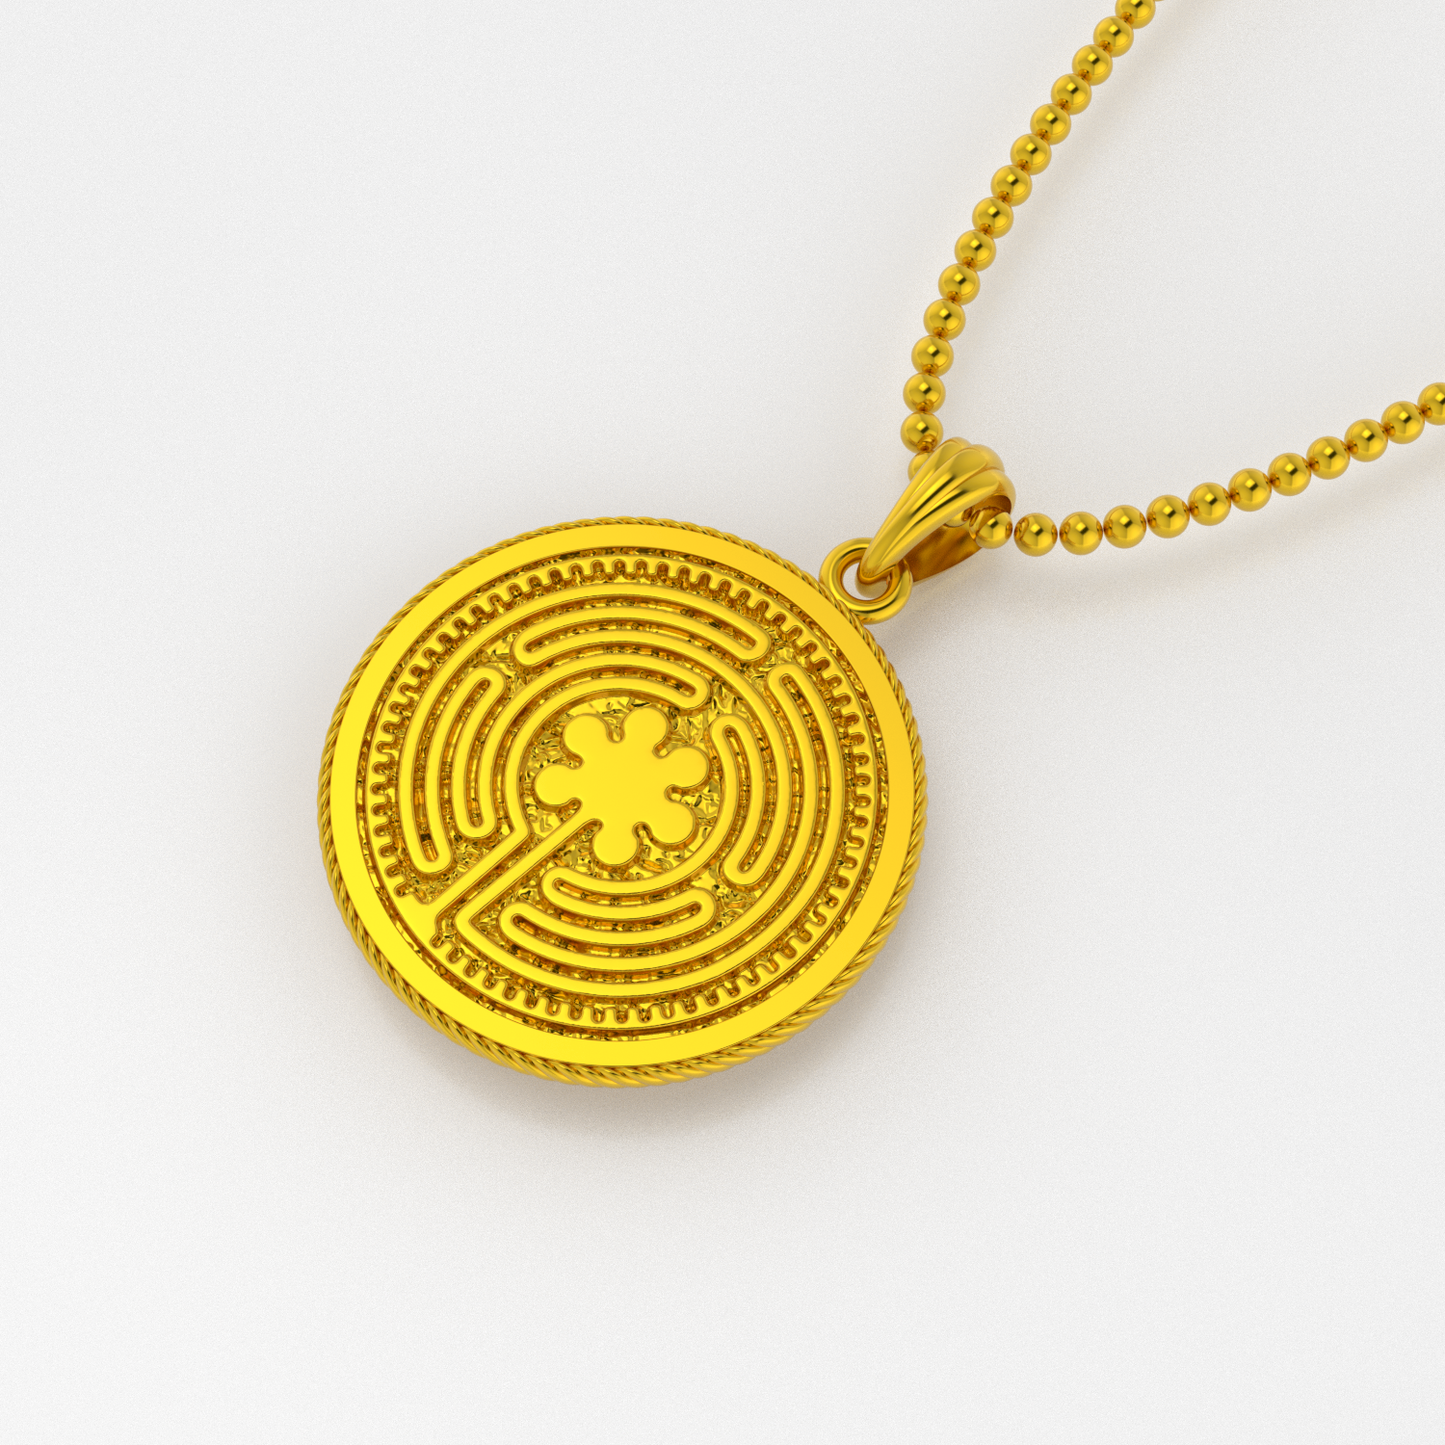 The Labyrinth Pendant